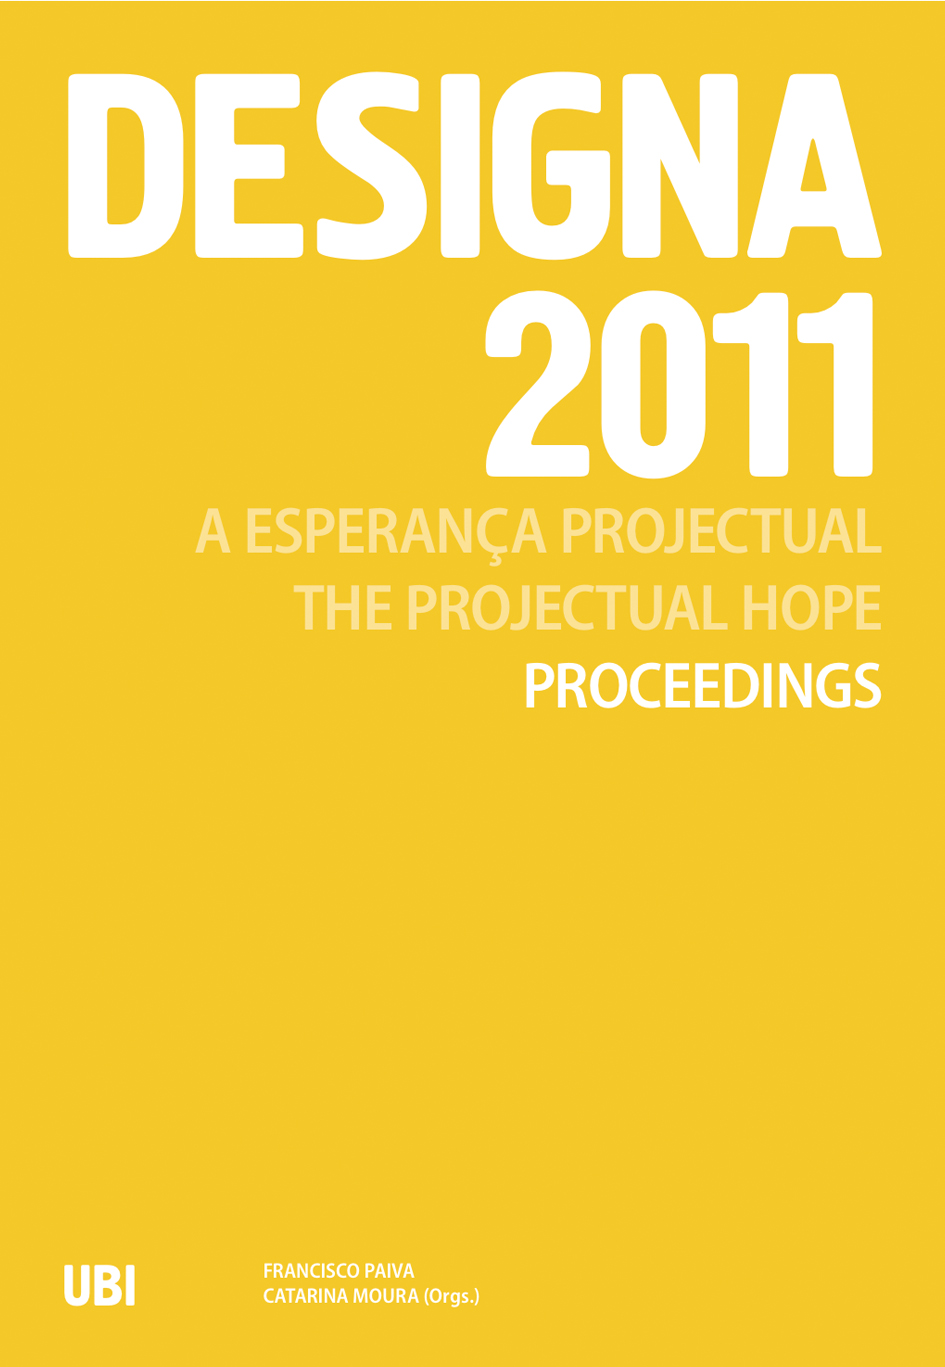 Capa: Francisco Paiva, Catarina Moura (Orgs.) (2012) DESIGNA 2011 - Projectual hope. Communication  +  Philosophy  +  Humanities. .